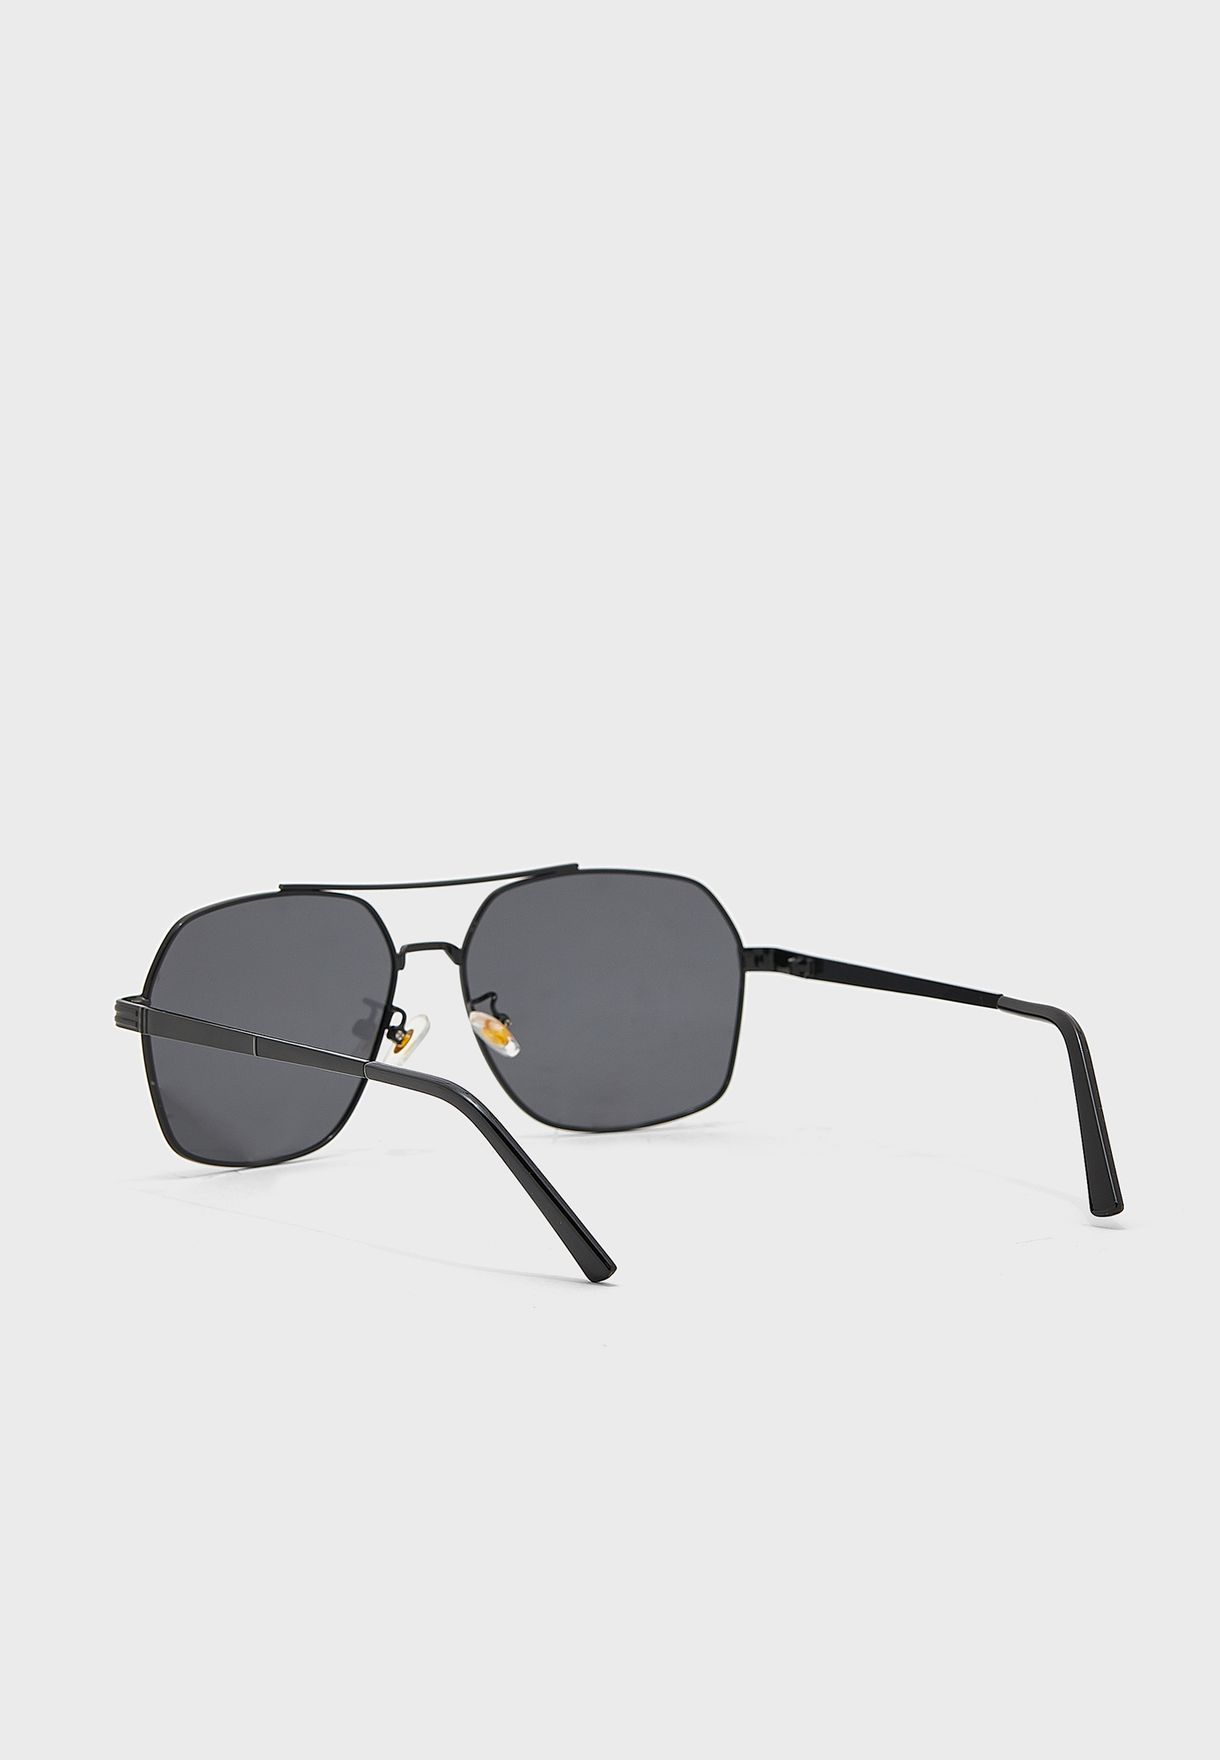 Square Aviator Sunglasses